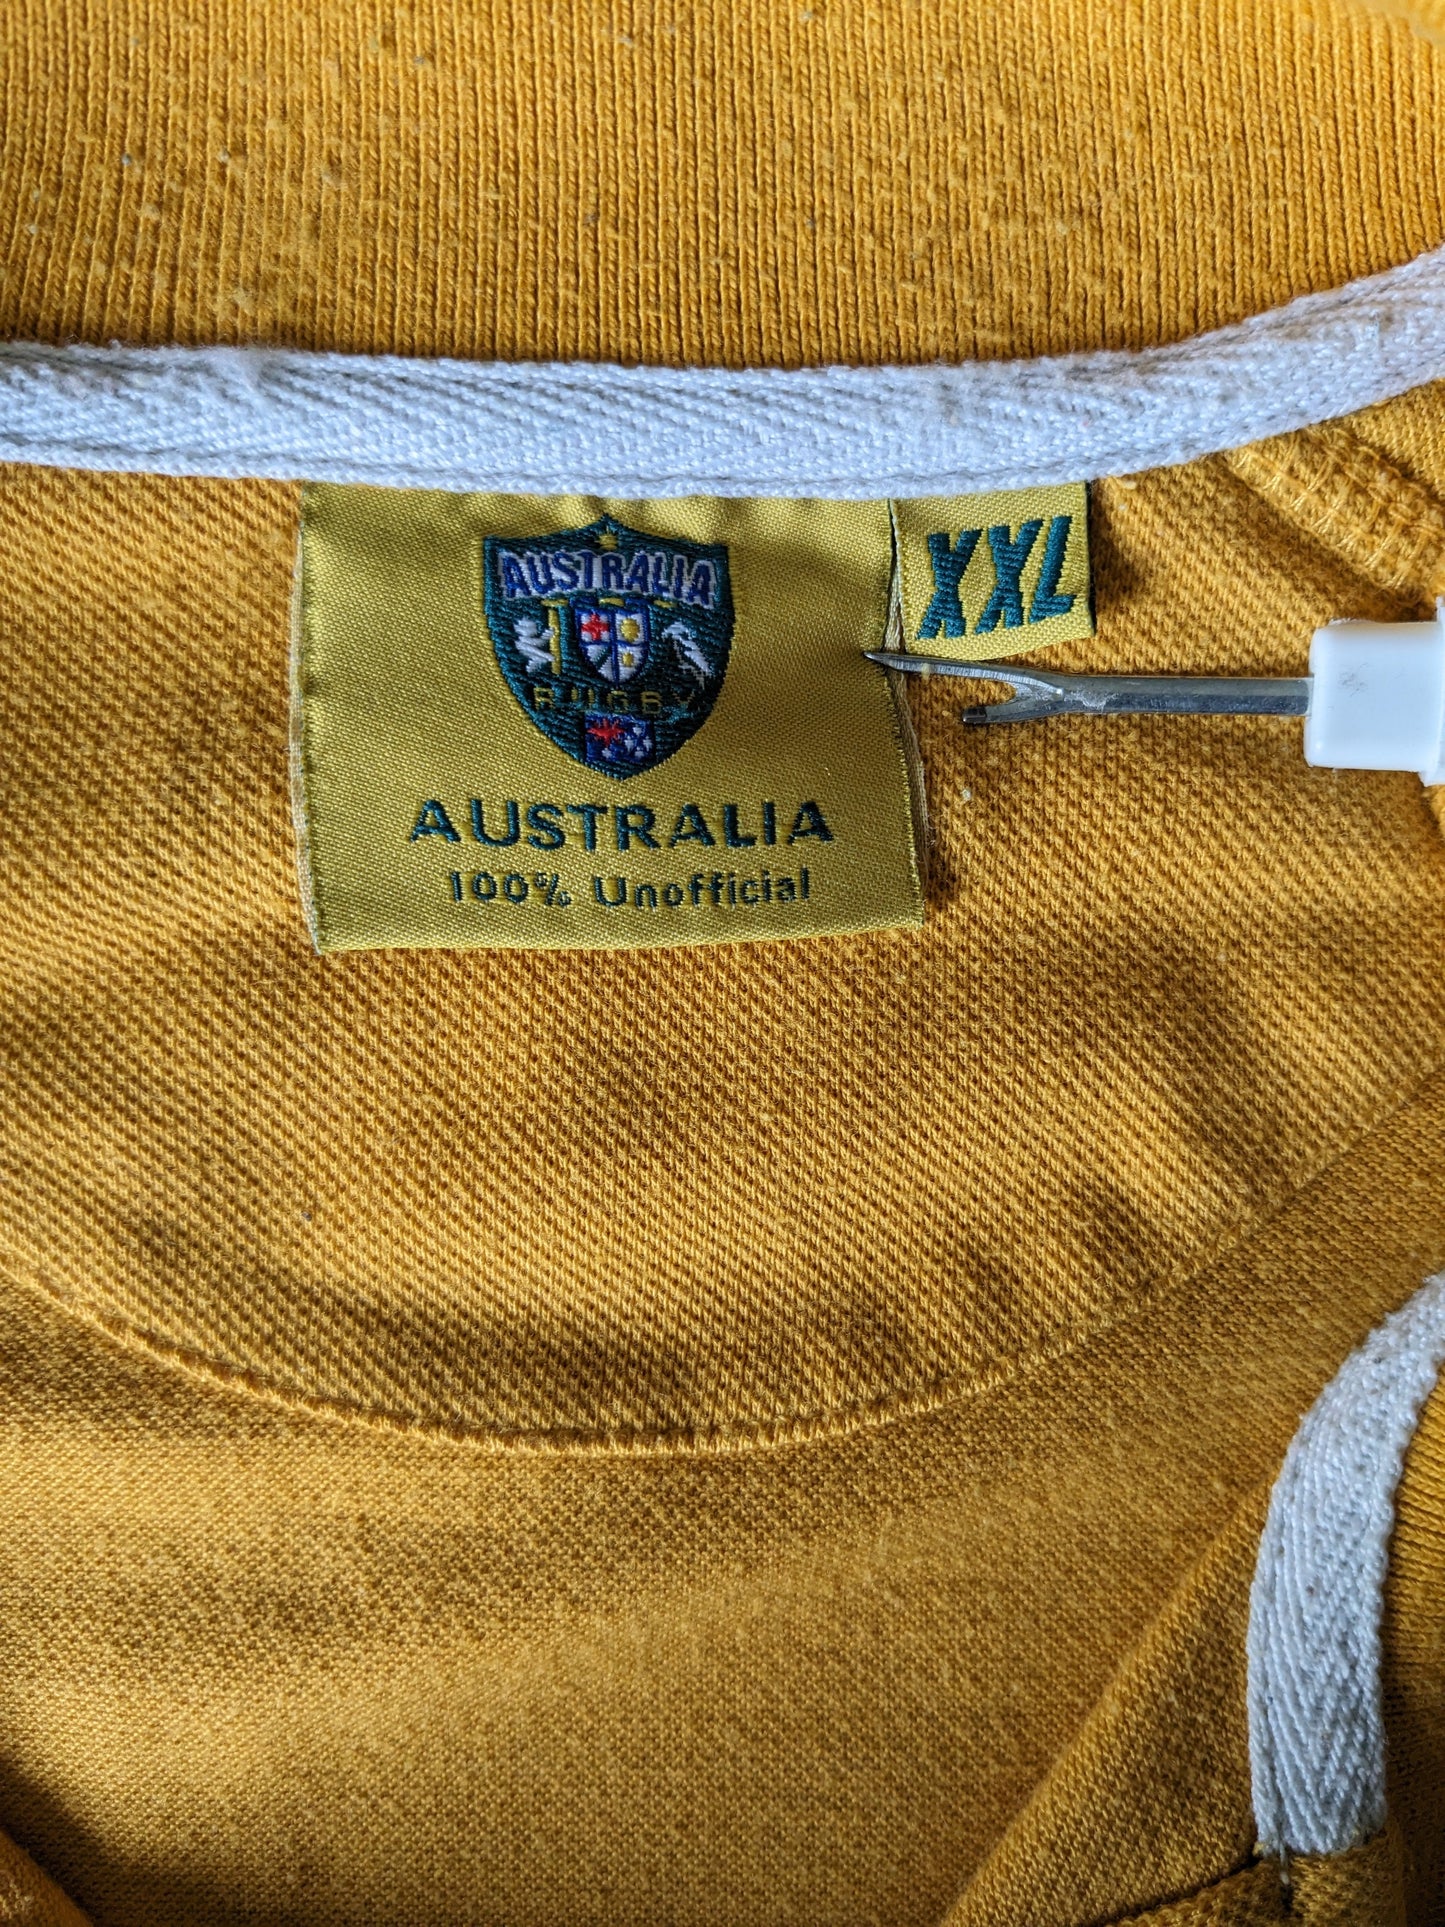 Vintage Australia Rugby Polo. Green white yellow colored. Size 2XL / XXL.